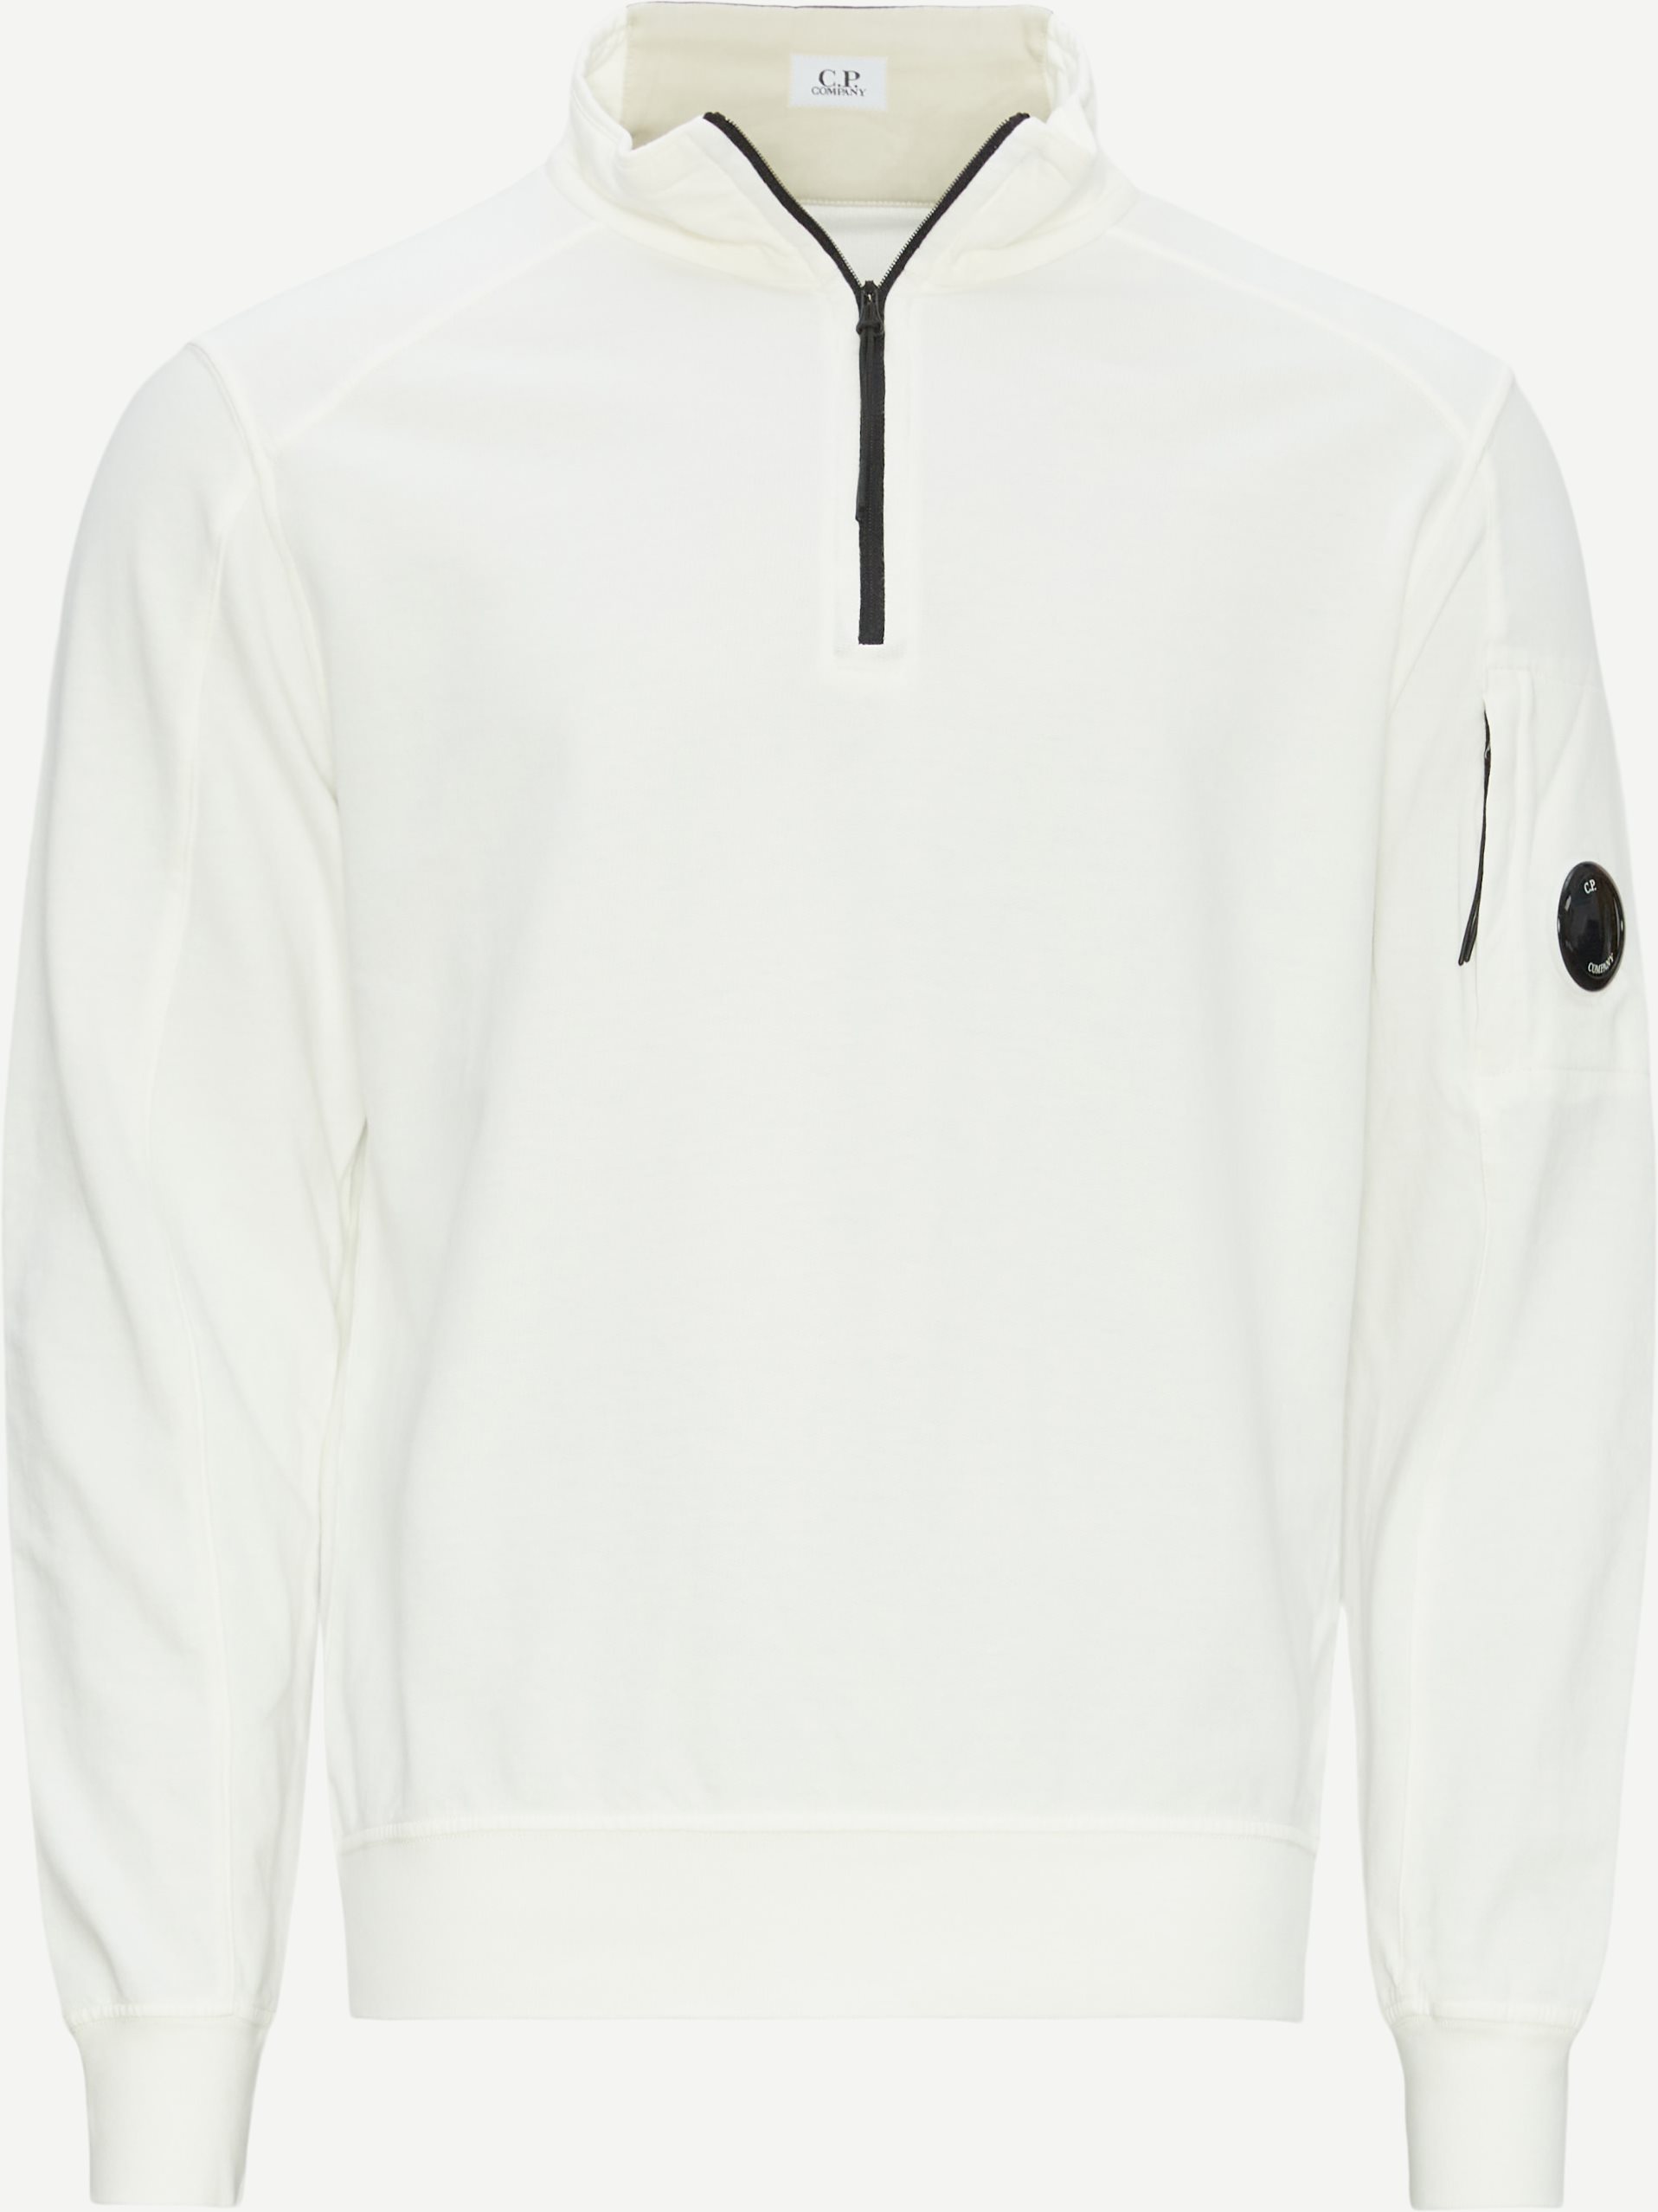 C.P. Company Sweatshirts SS035A 002246G White